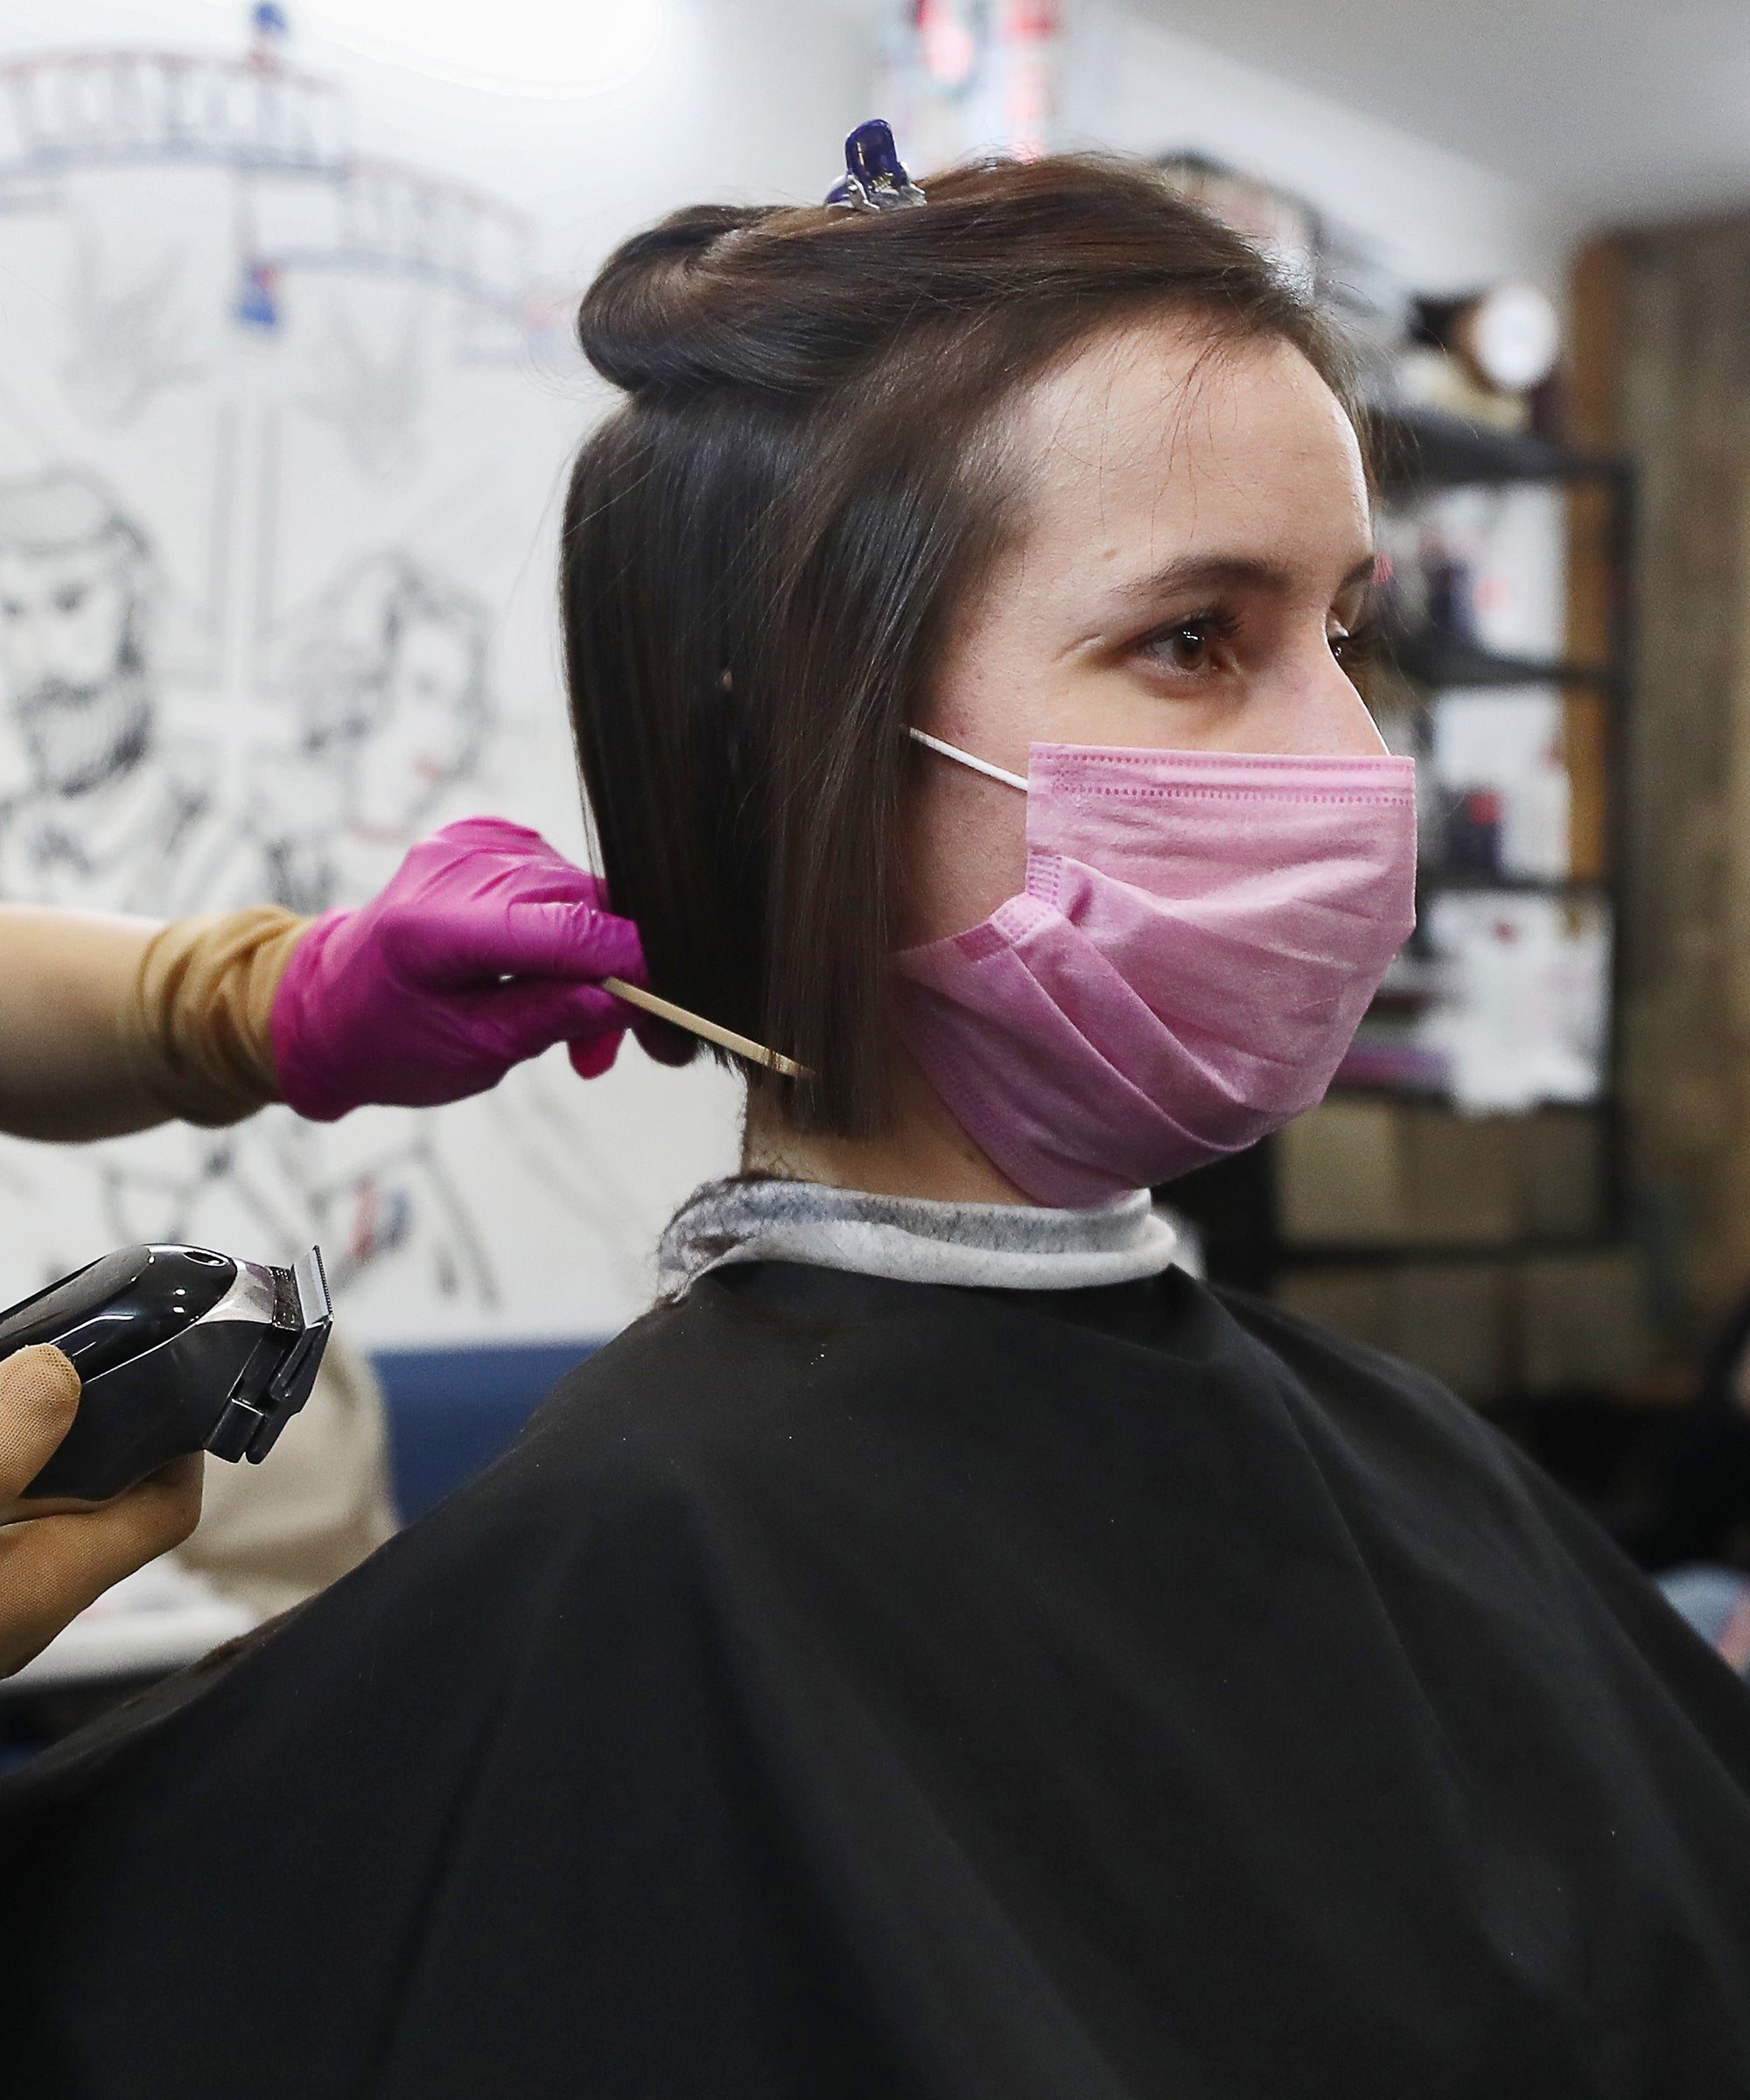 Will Hair Salons Survive The Impact Of Coronavirus?